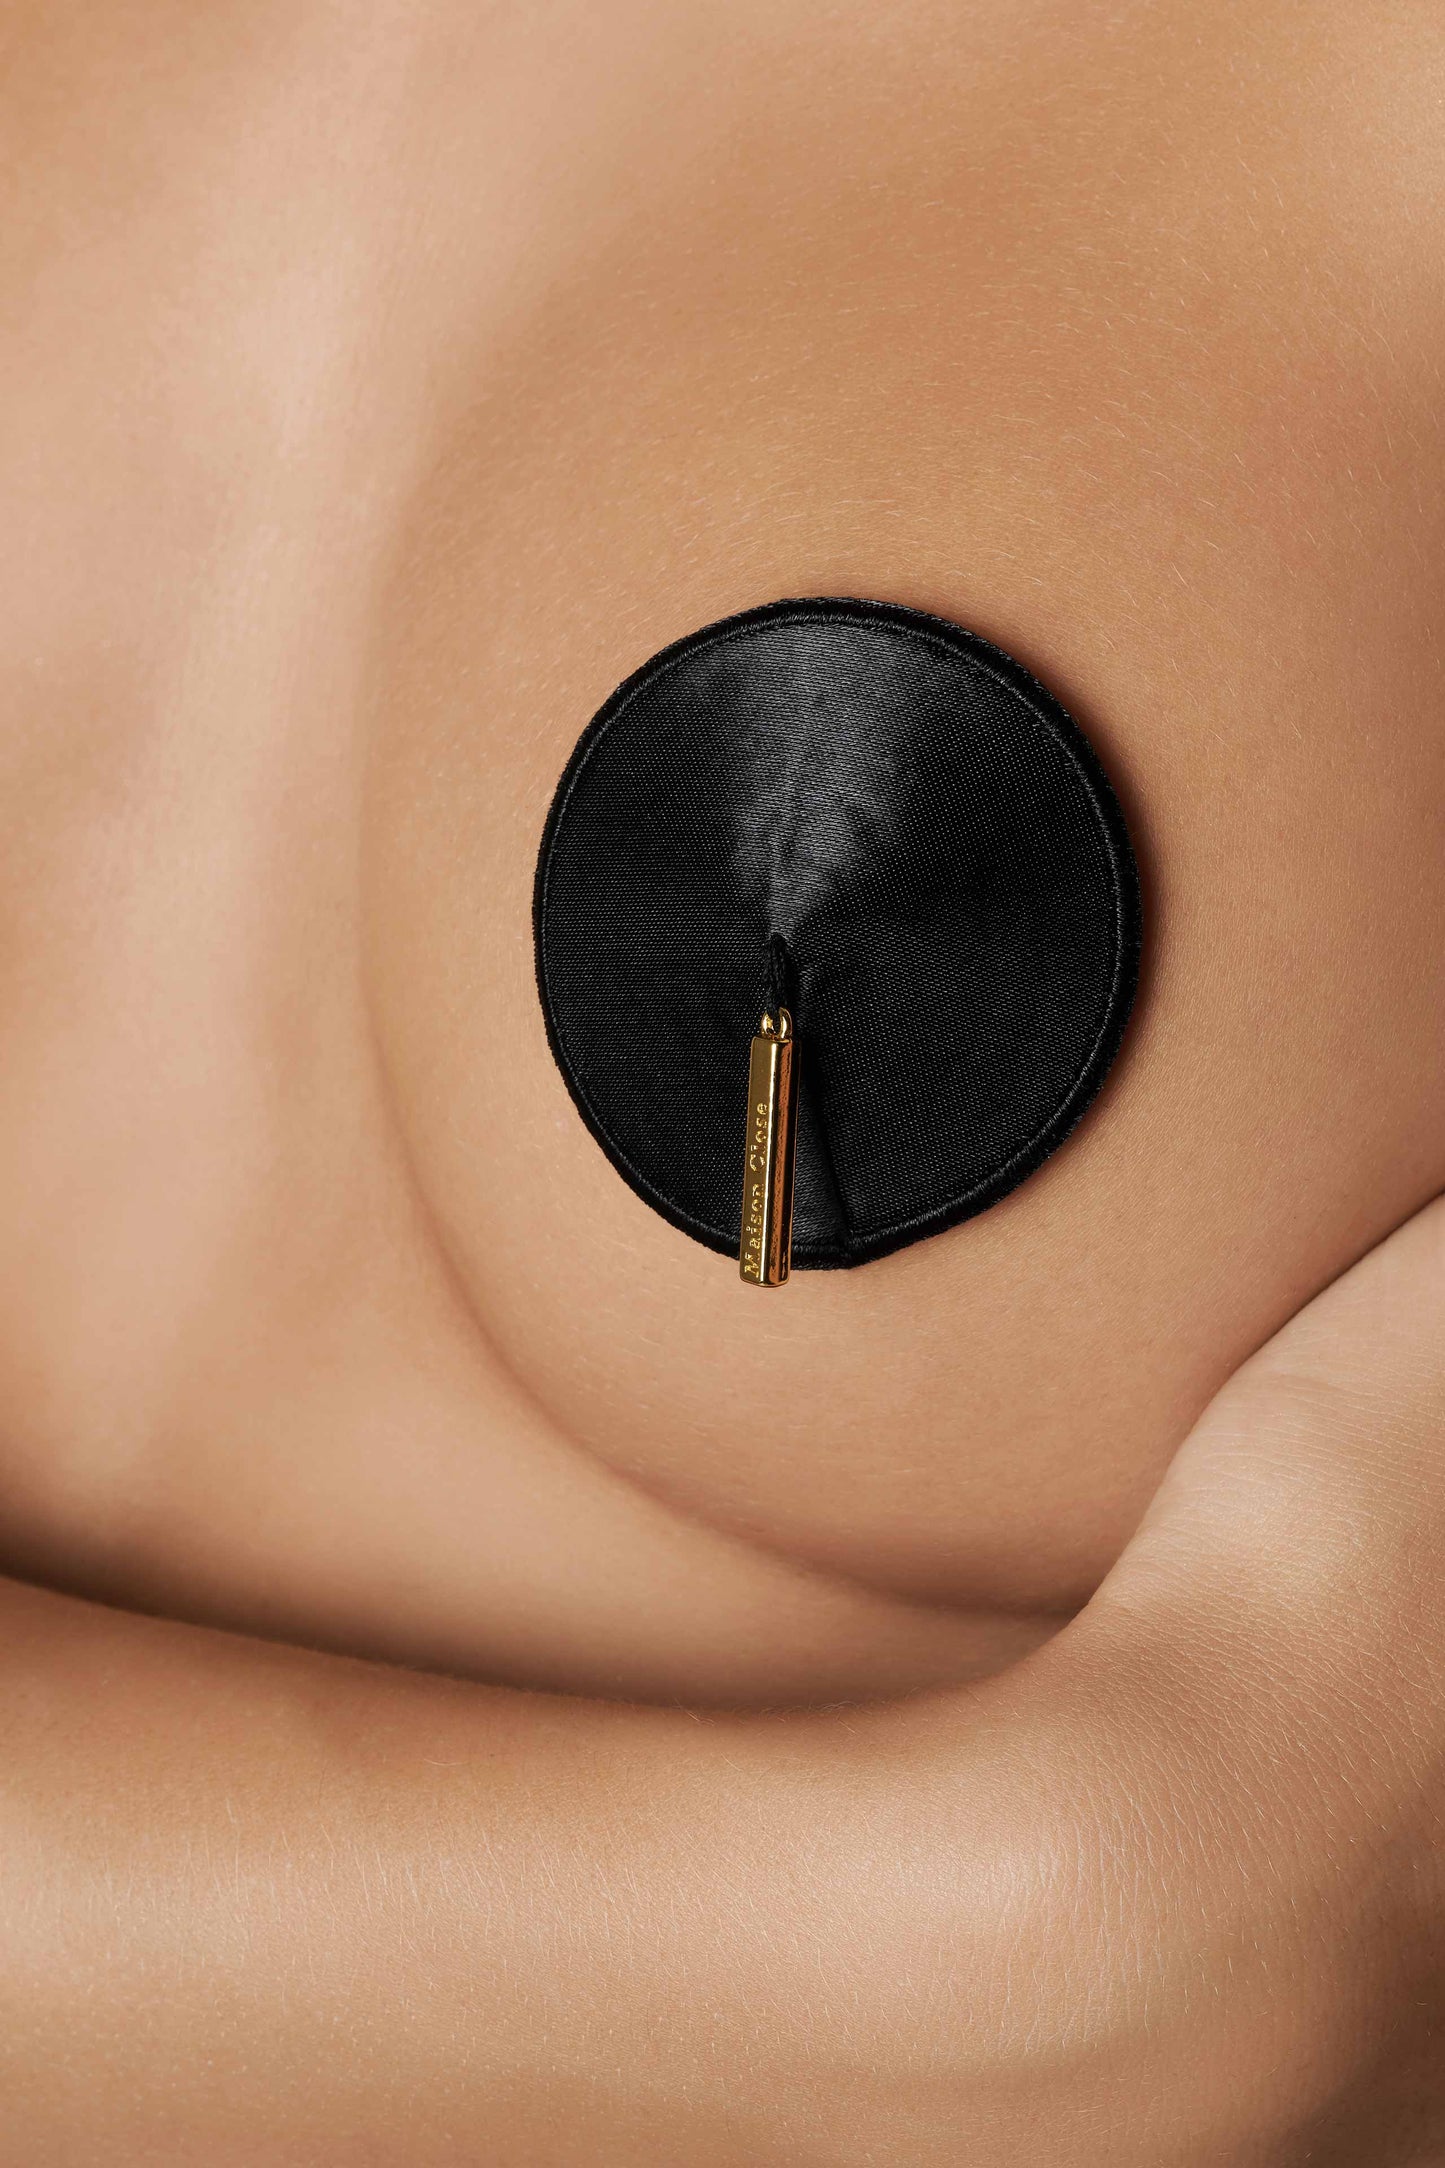 Maison Close Le Fe'tiches Nipple Covers